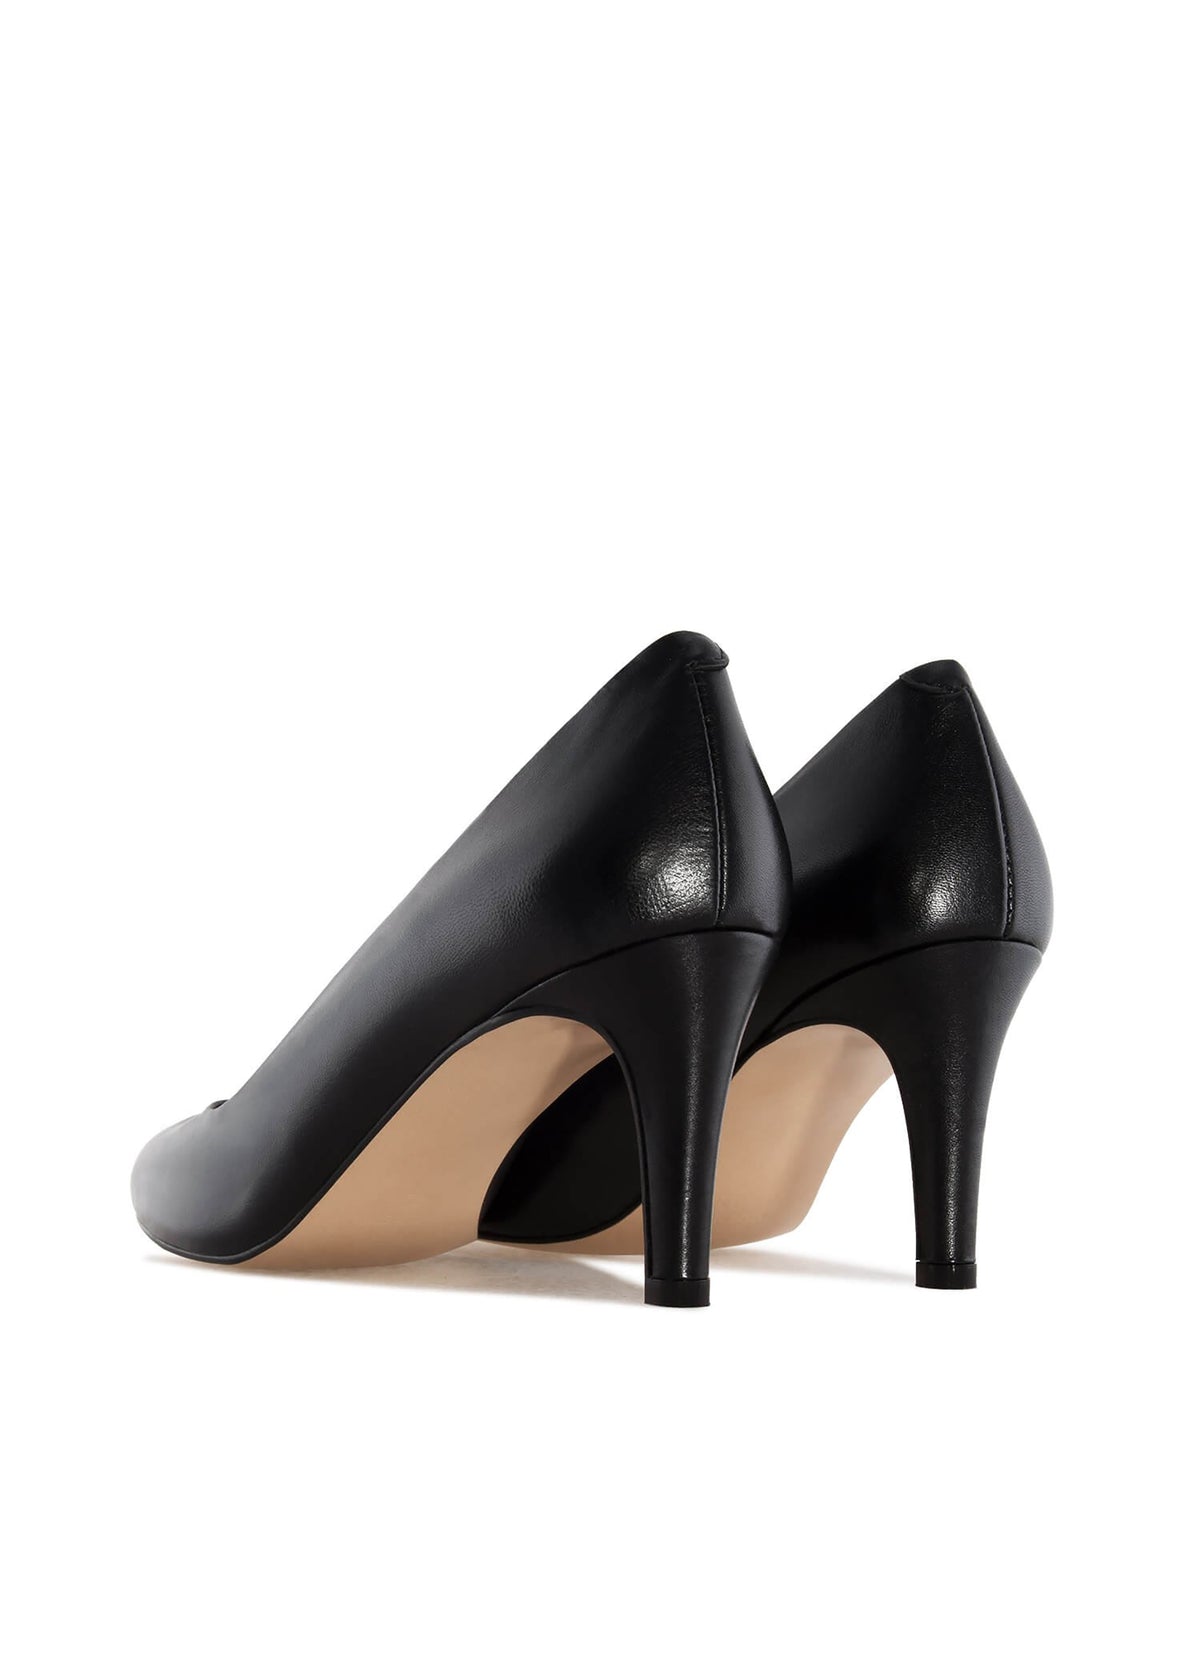 Stiletto heels - Natalia, black leather